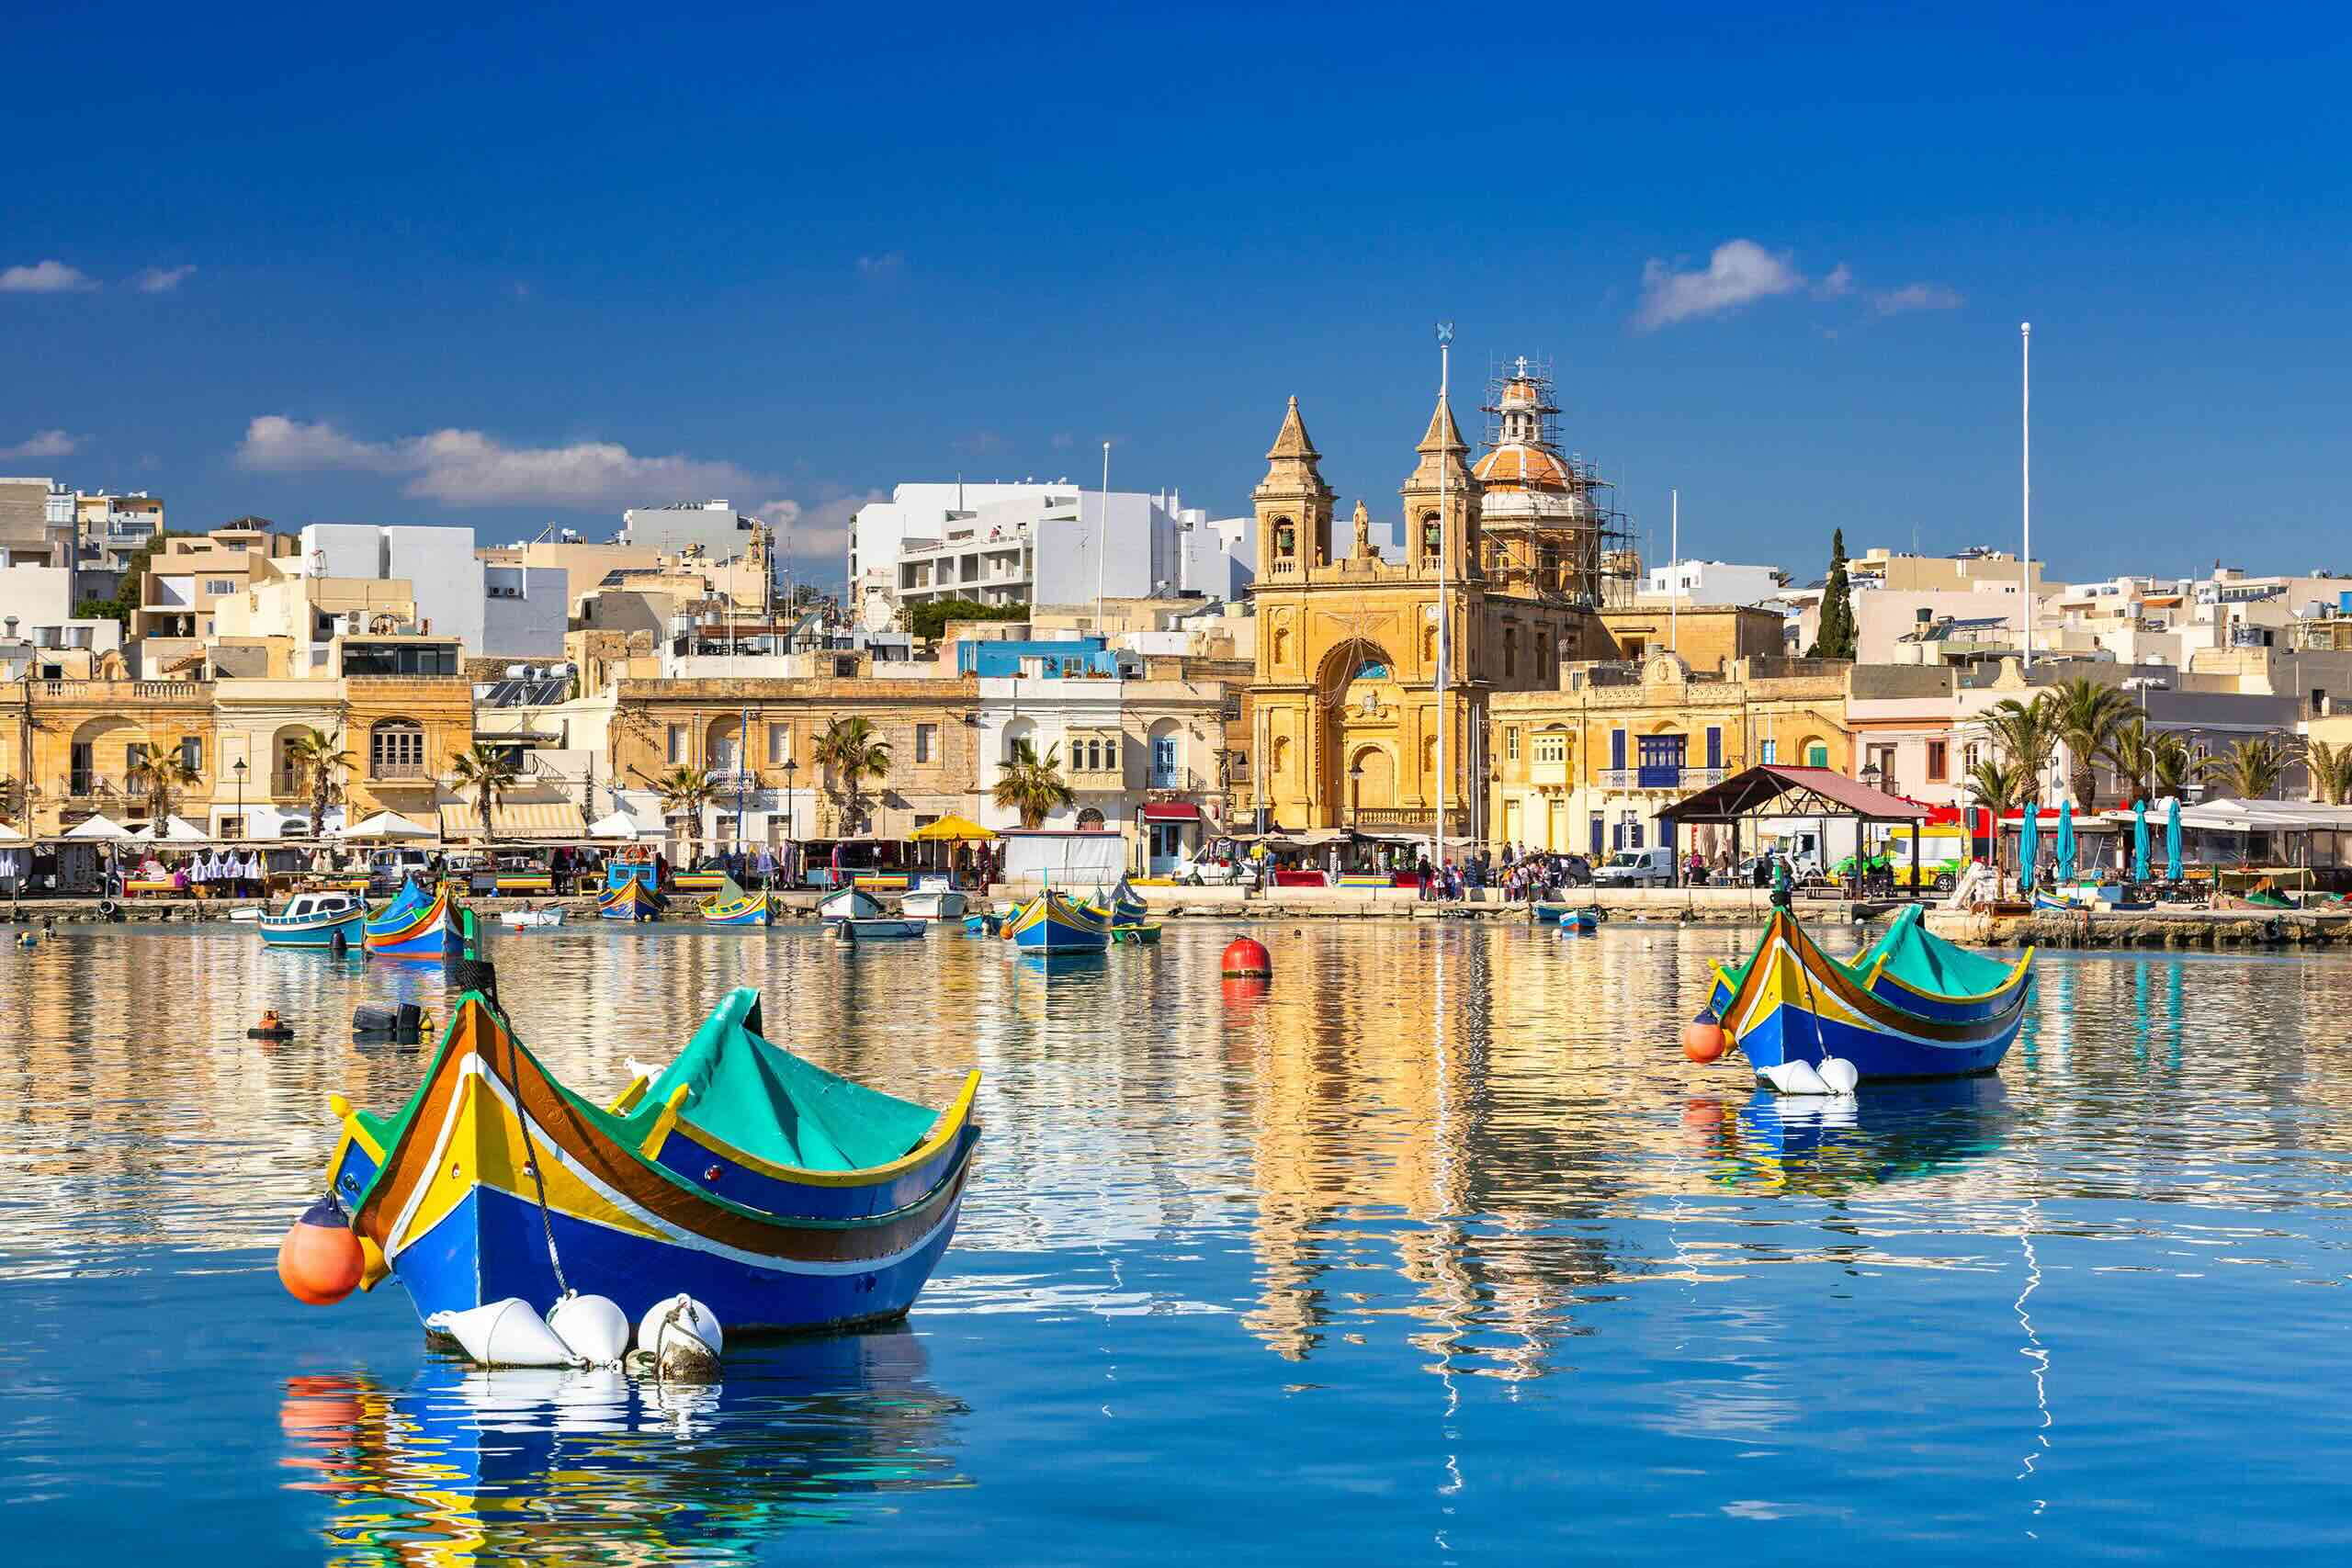 Reserve at the best restaurants in Malta